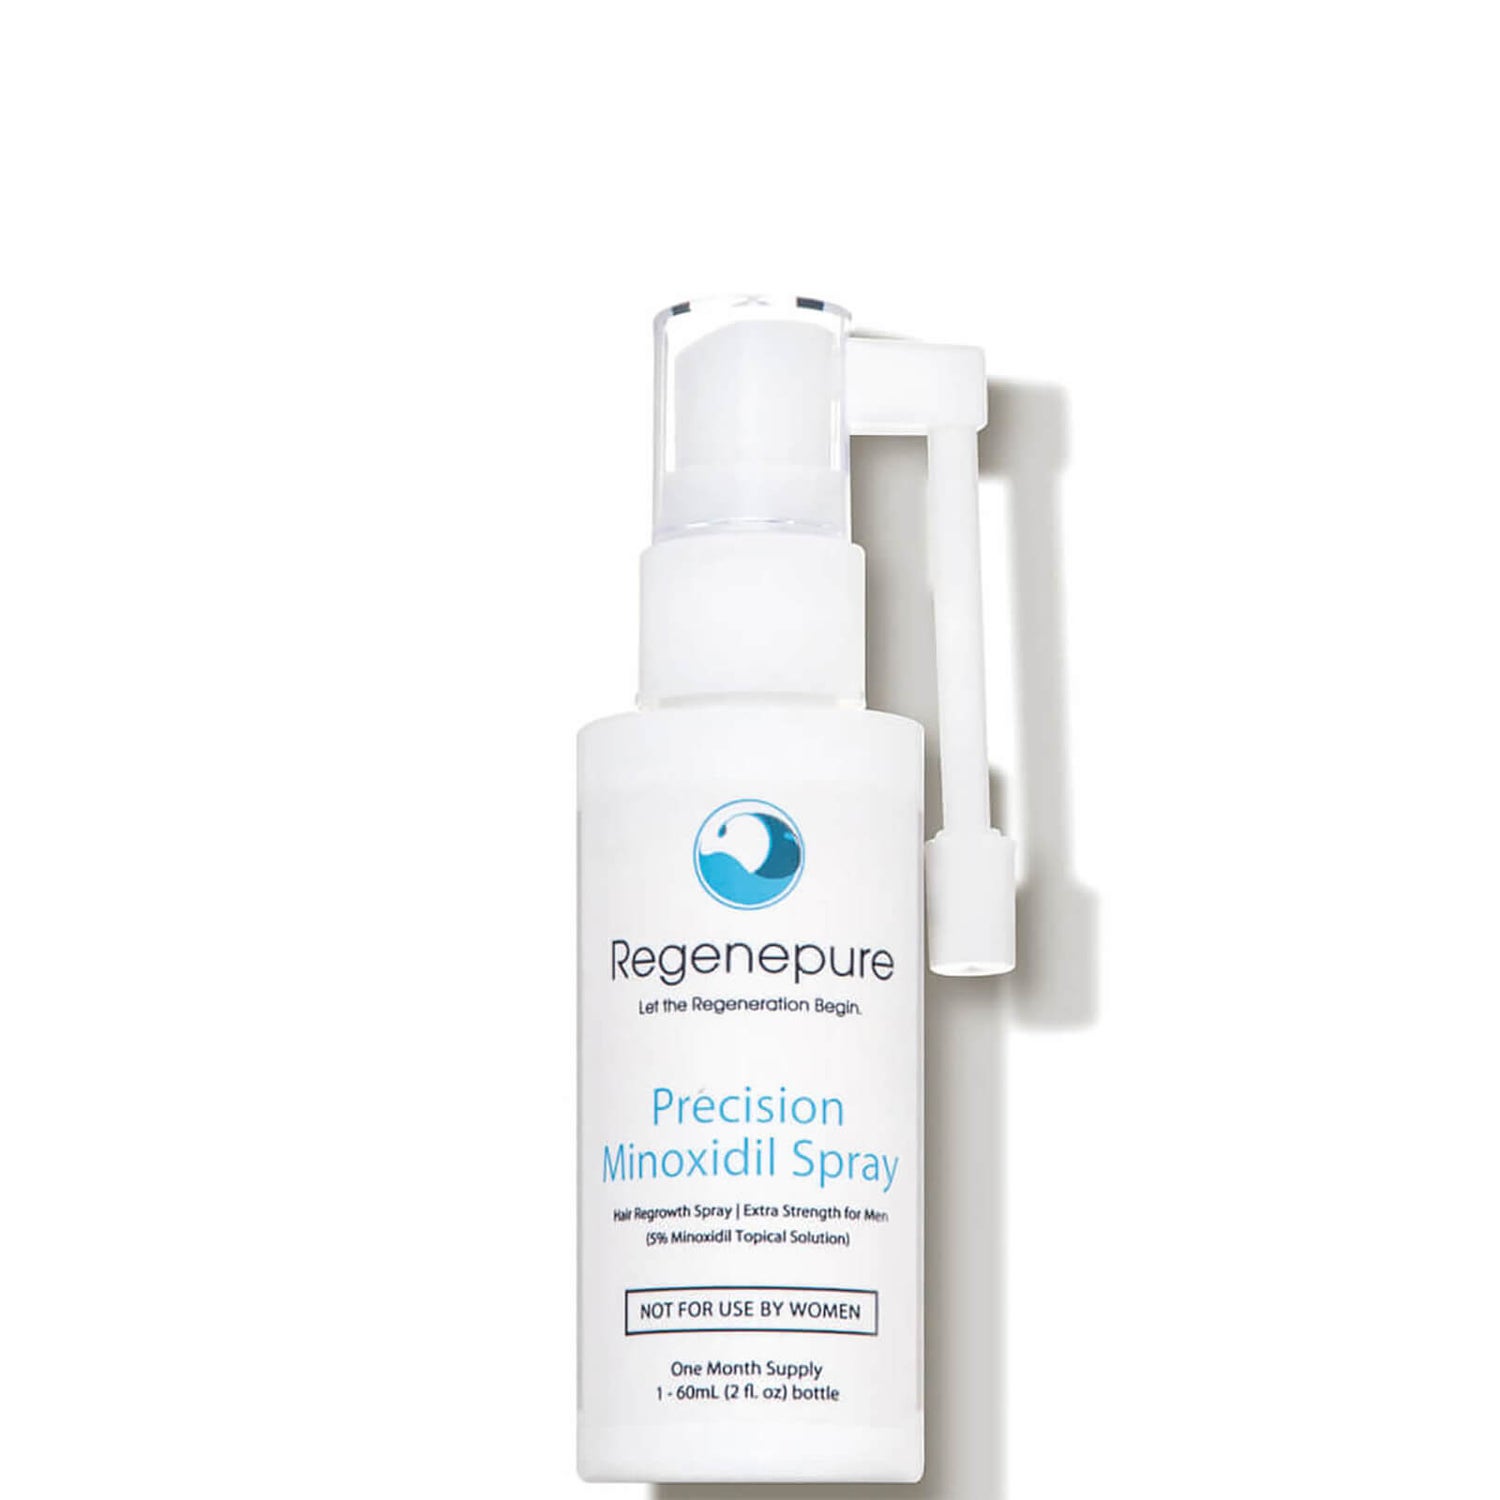 Regenepure Precision 5 Minoxidil Spray for Men (2 fl. oz.)